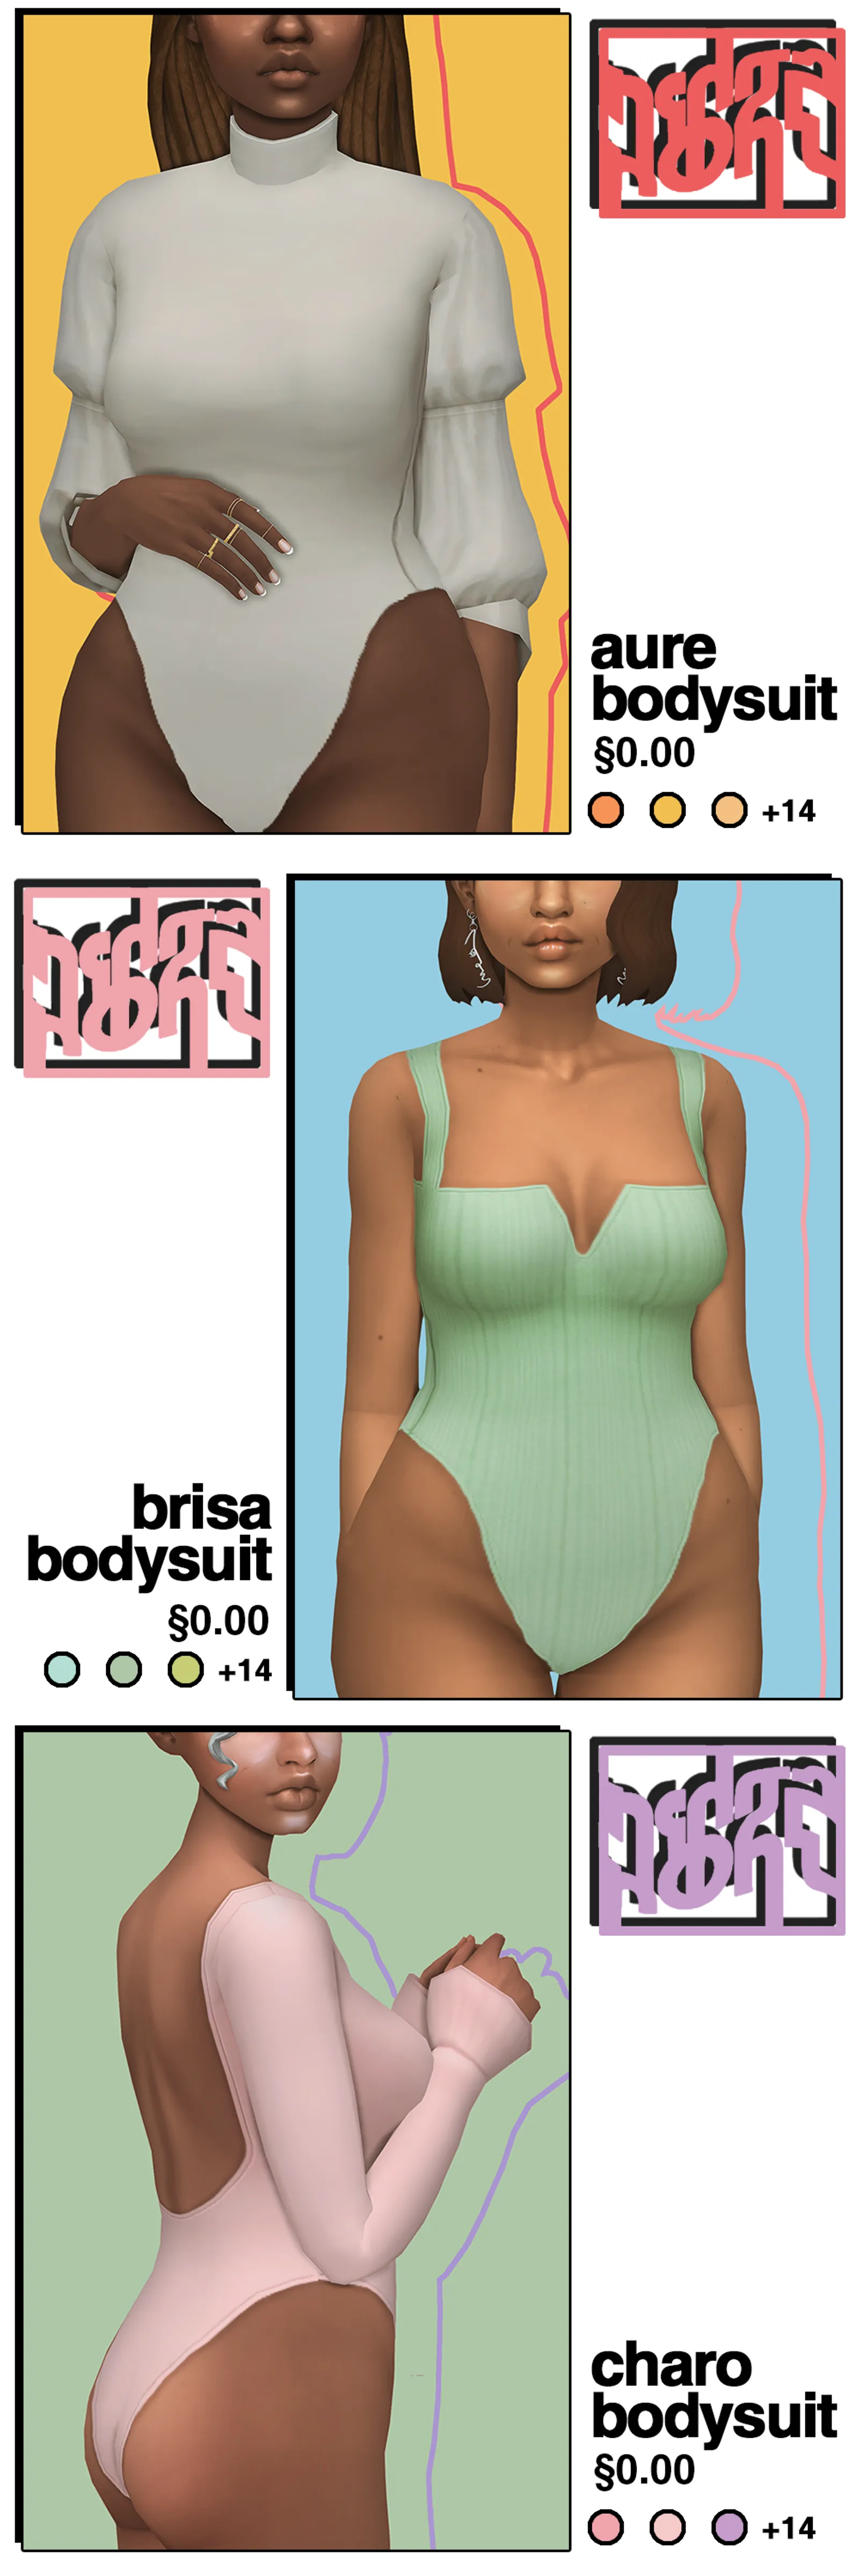 aure, brisa, & charo • a set of bodysuits